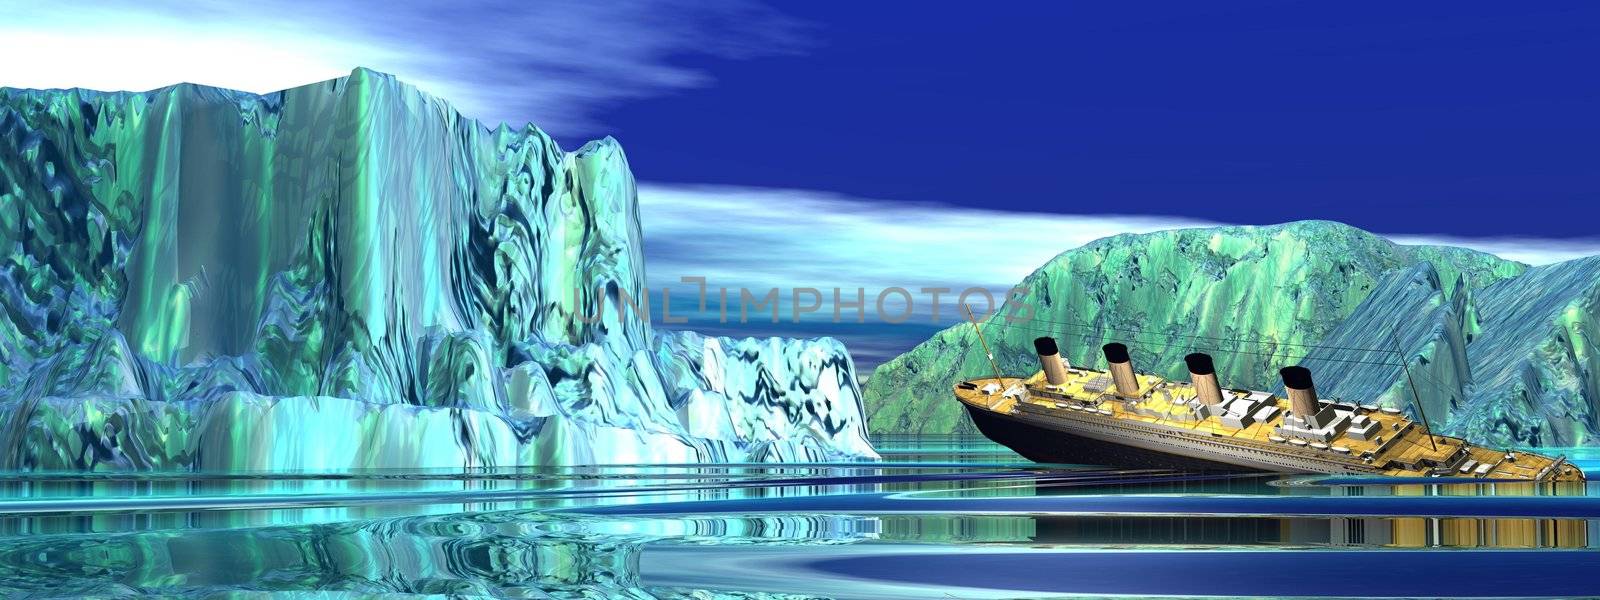 Titanic boat sinking by Elenaphotos21